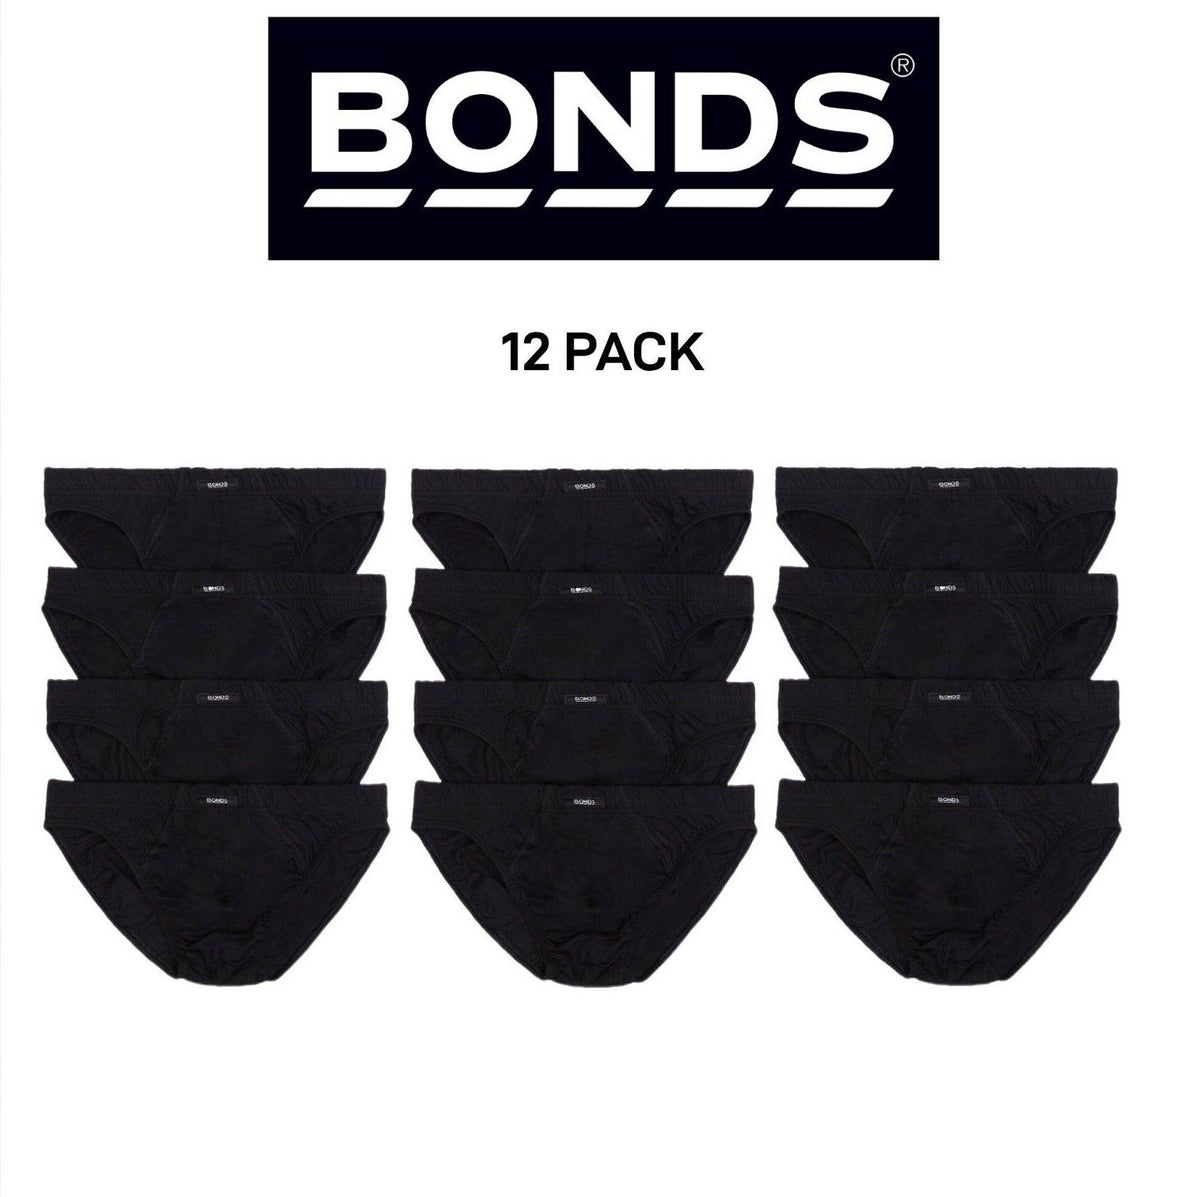 Bonds Mens Action Brief  Soft Cotton and Encased Elastic Comfort 12 Pack M8OS4